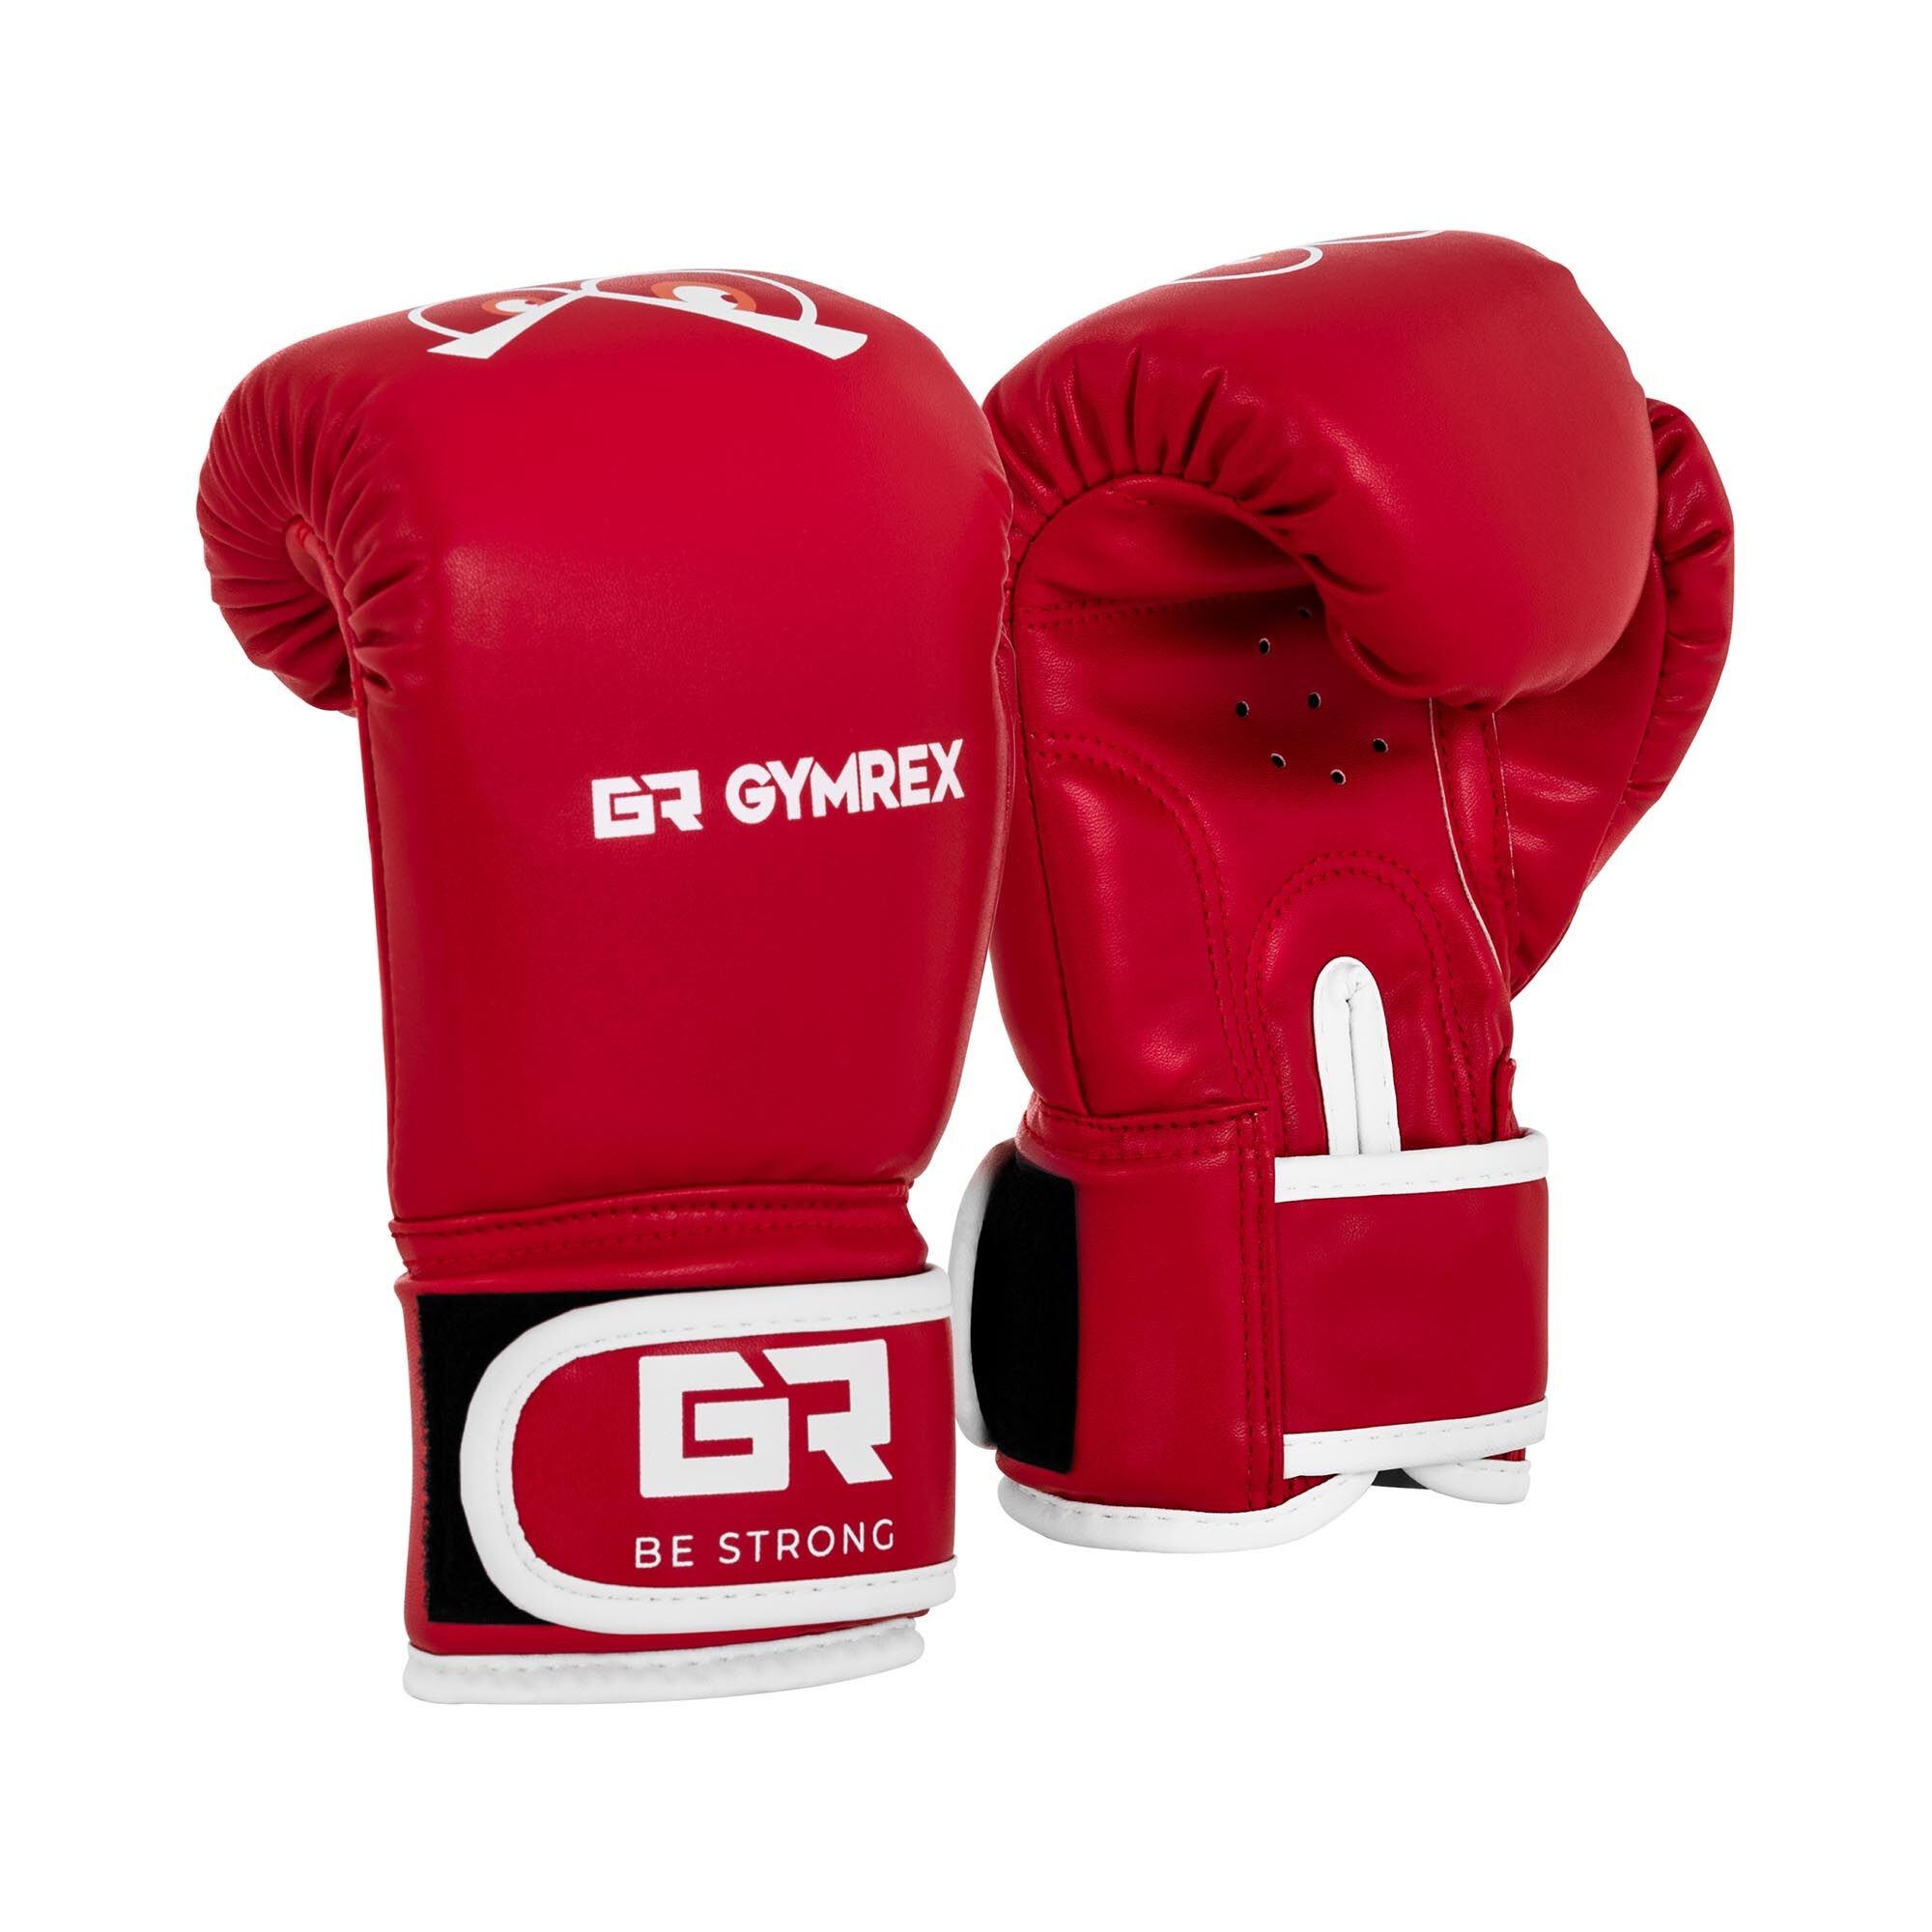 Gymrex Kids Boxing Gloves - 4 oz - red